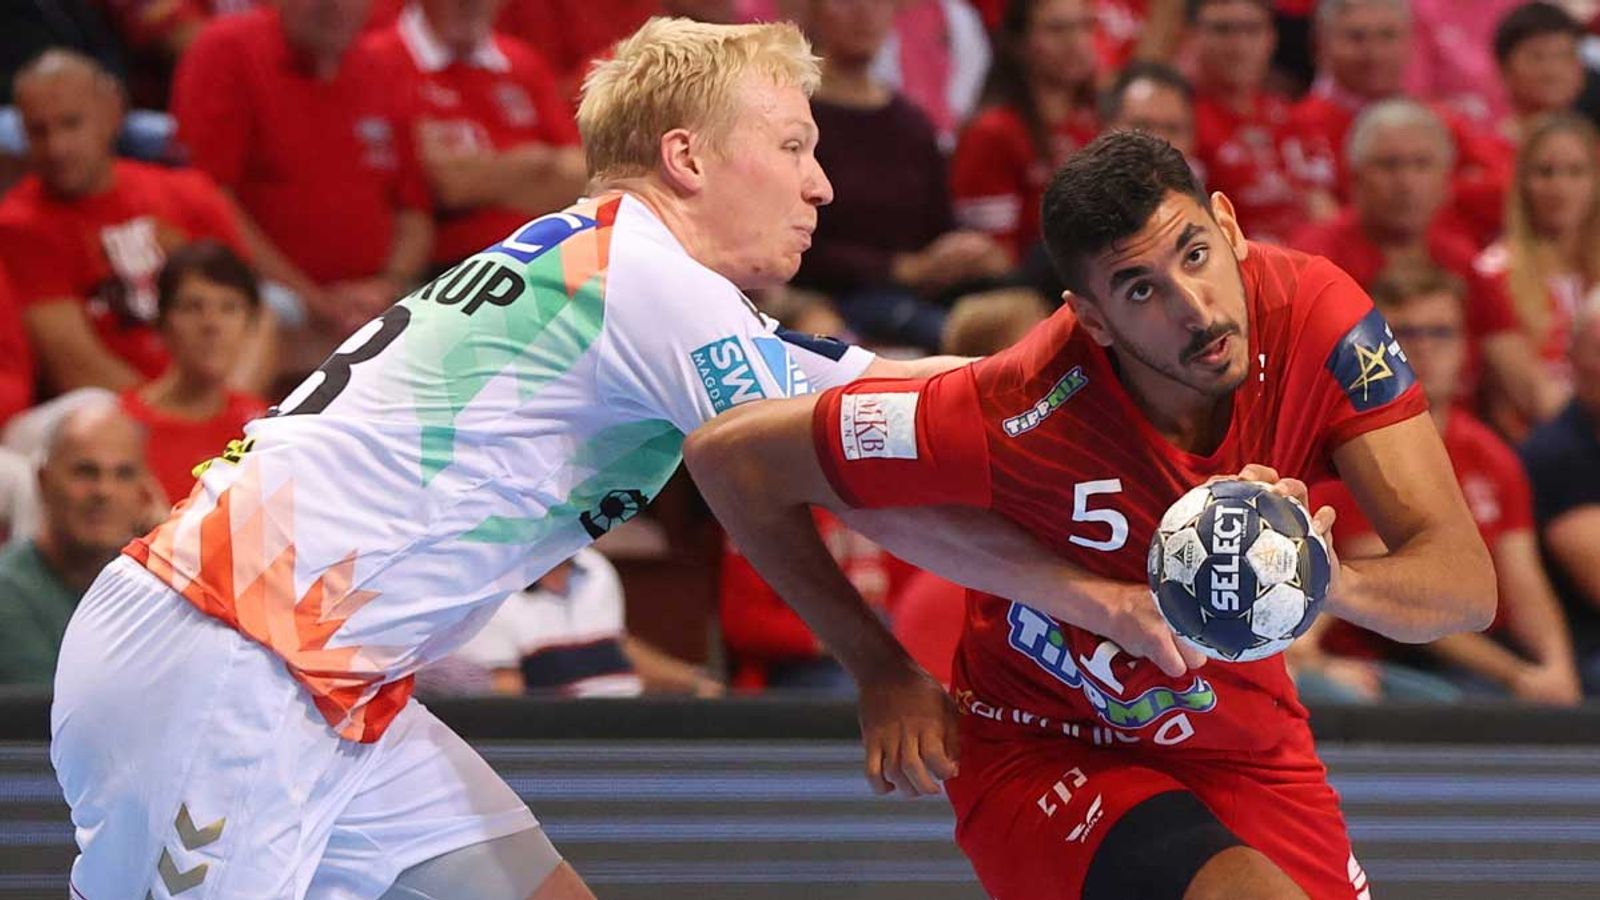 Champions League Magdeburg erkämpft sich gegen Telekom Veszprem Remis Handball News Sky Sport